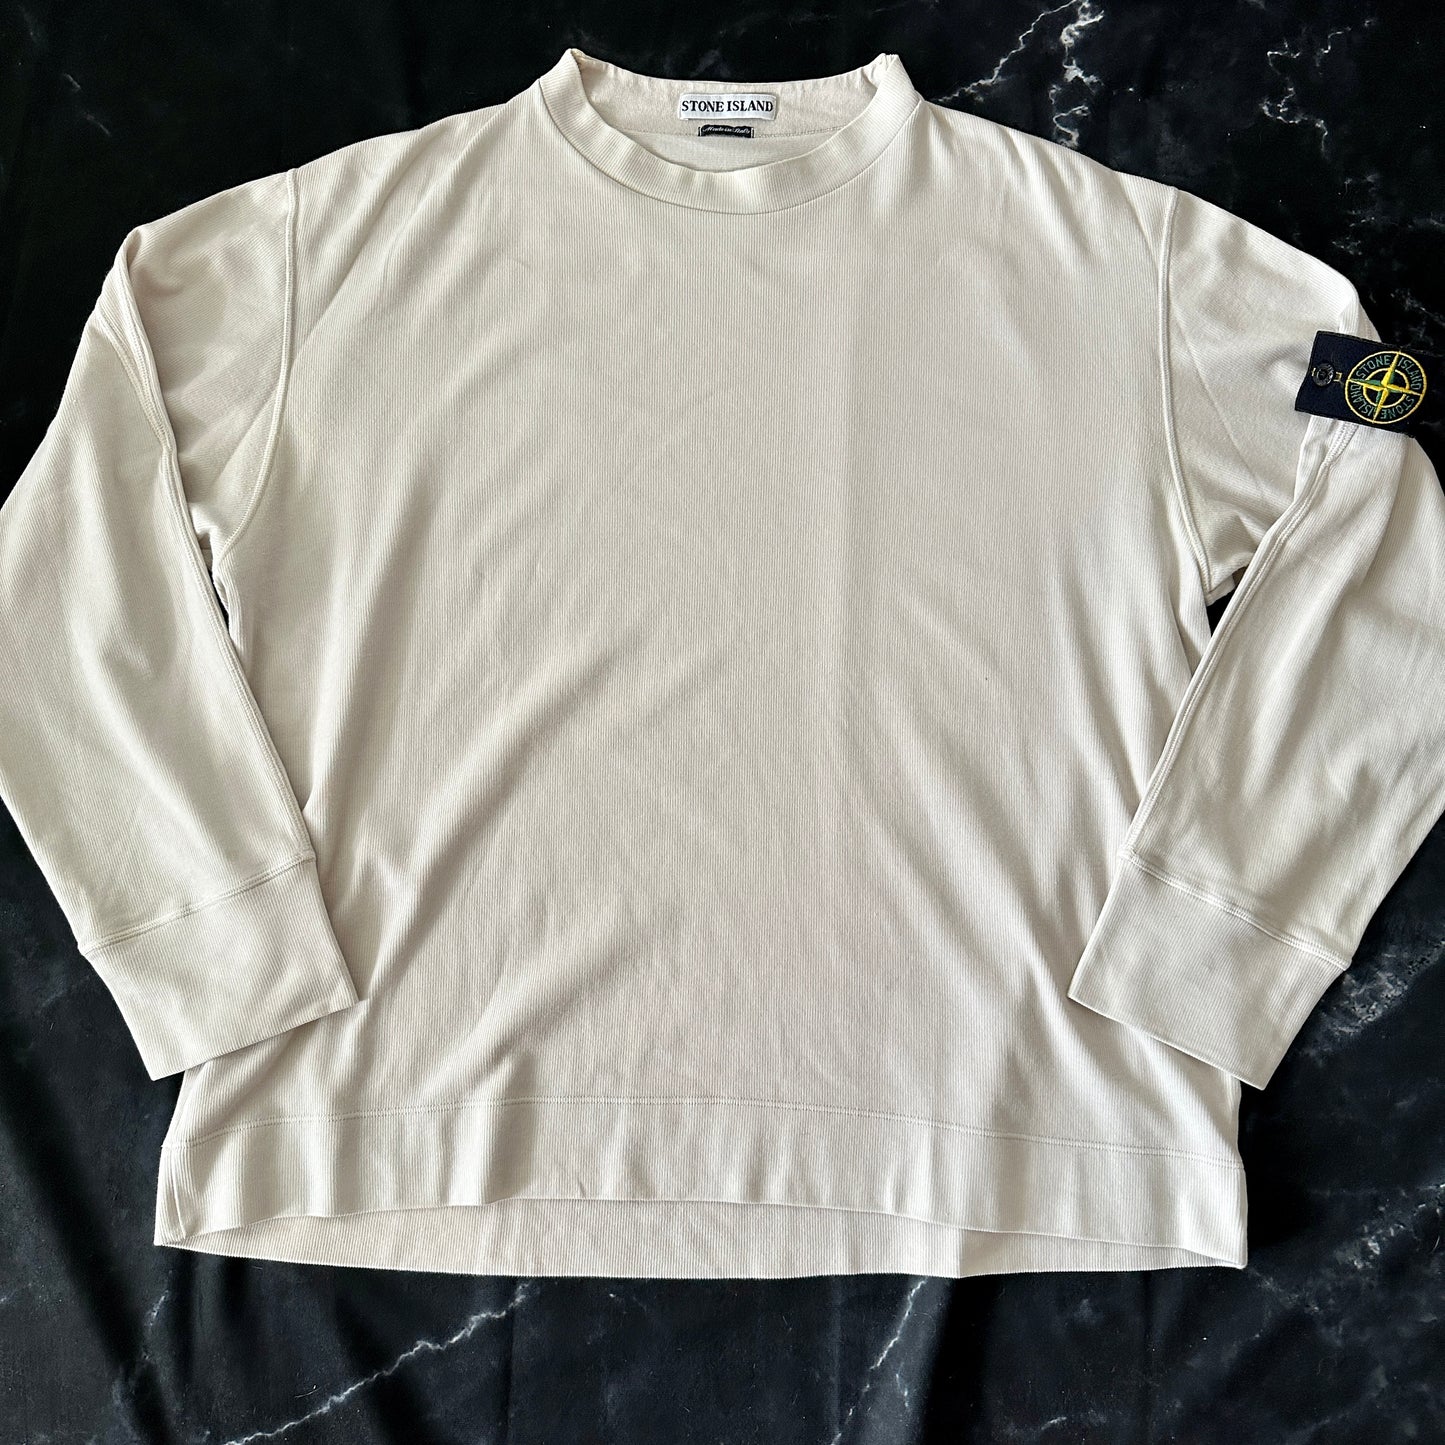 Stone Island Vintage Longsleeve Shirt 2000 - XL - Made in Italy